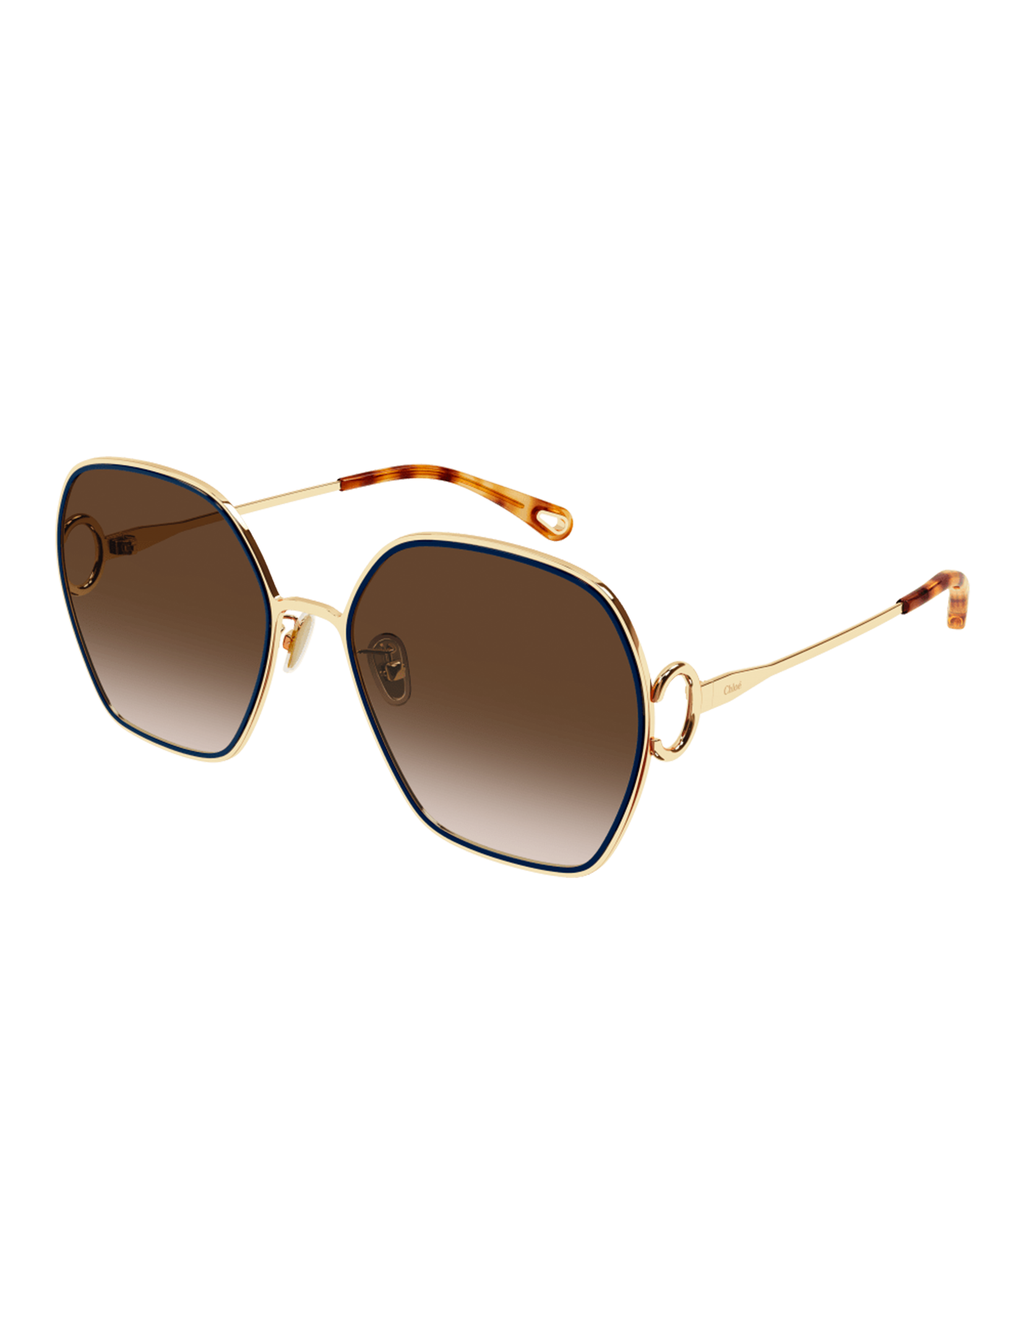 Geometric Sunglasses, Gold/Navy Trim